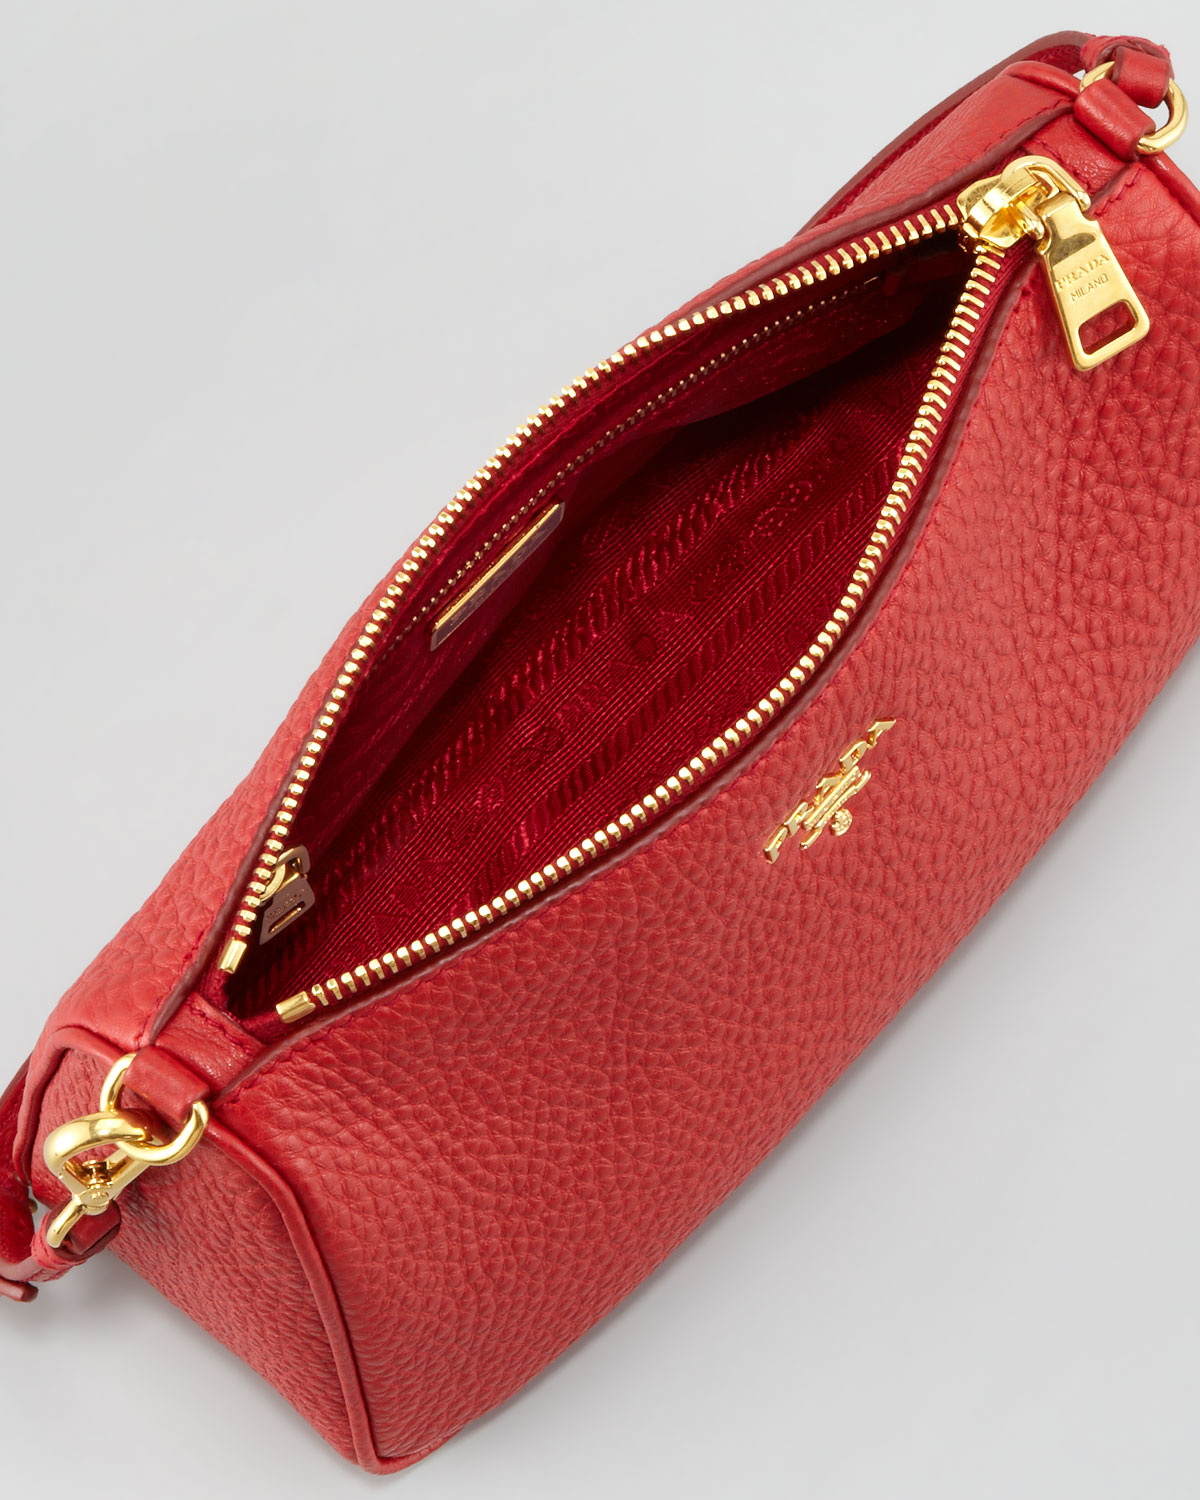 Lyst - Prada Daino Small Shoulder Bag in Red